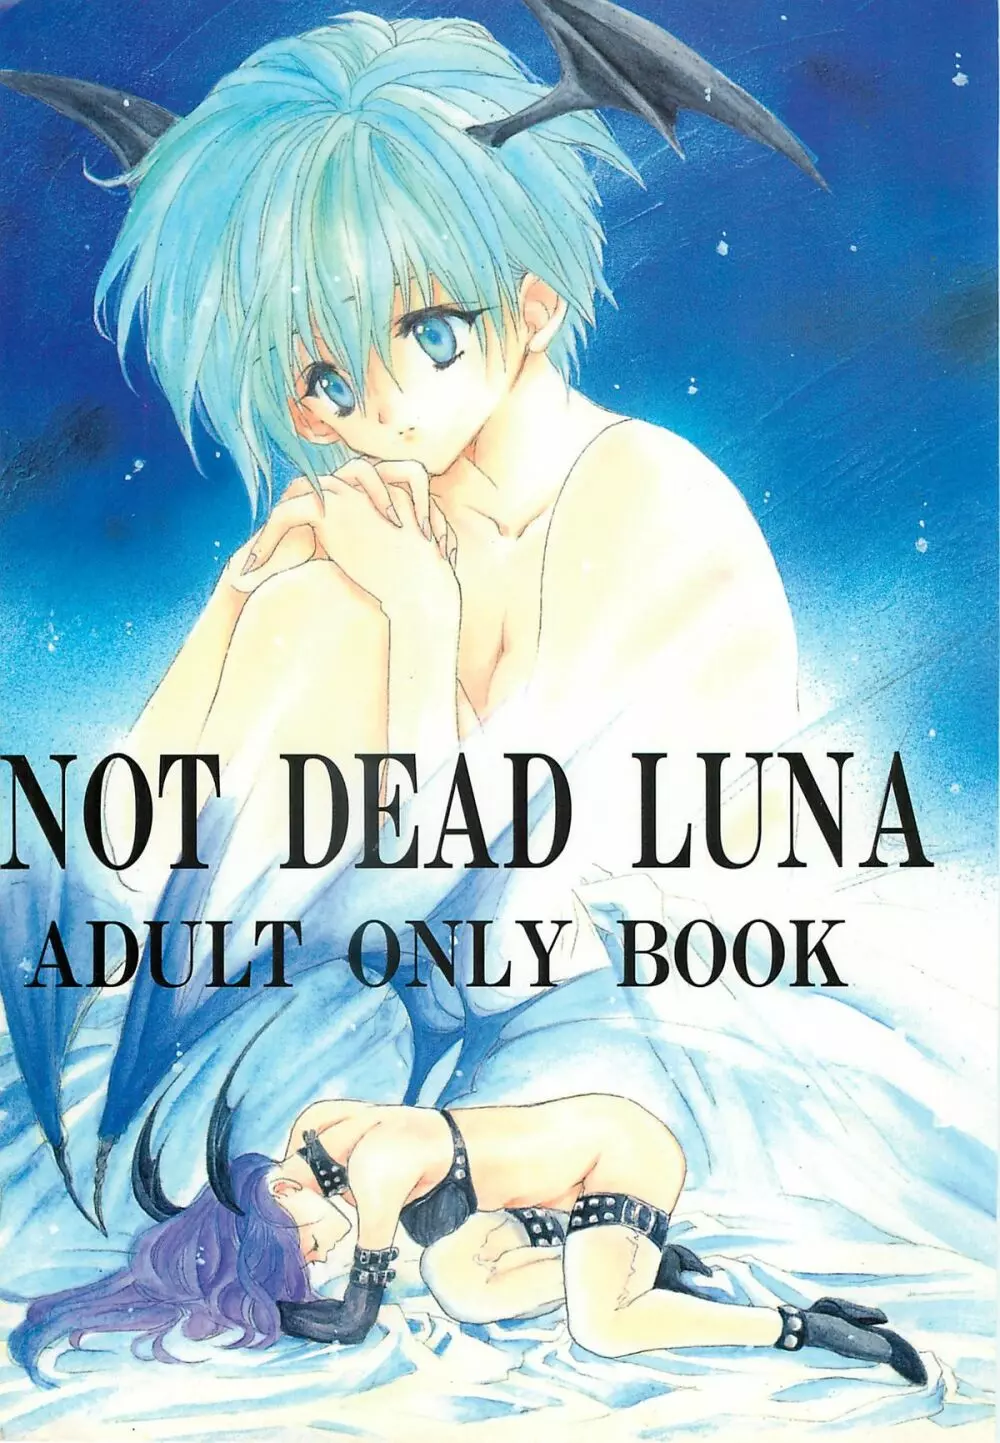 NOT DEAD LUNA